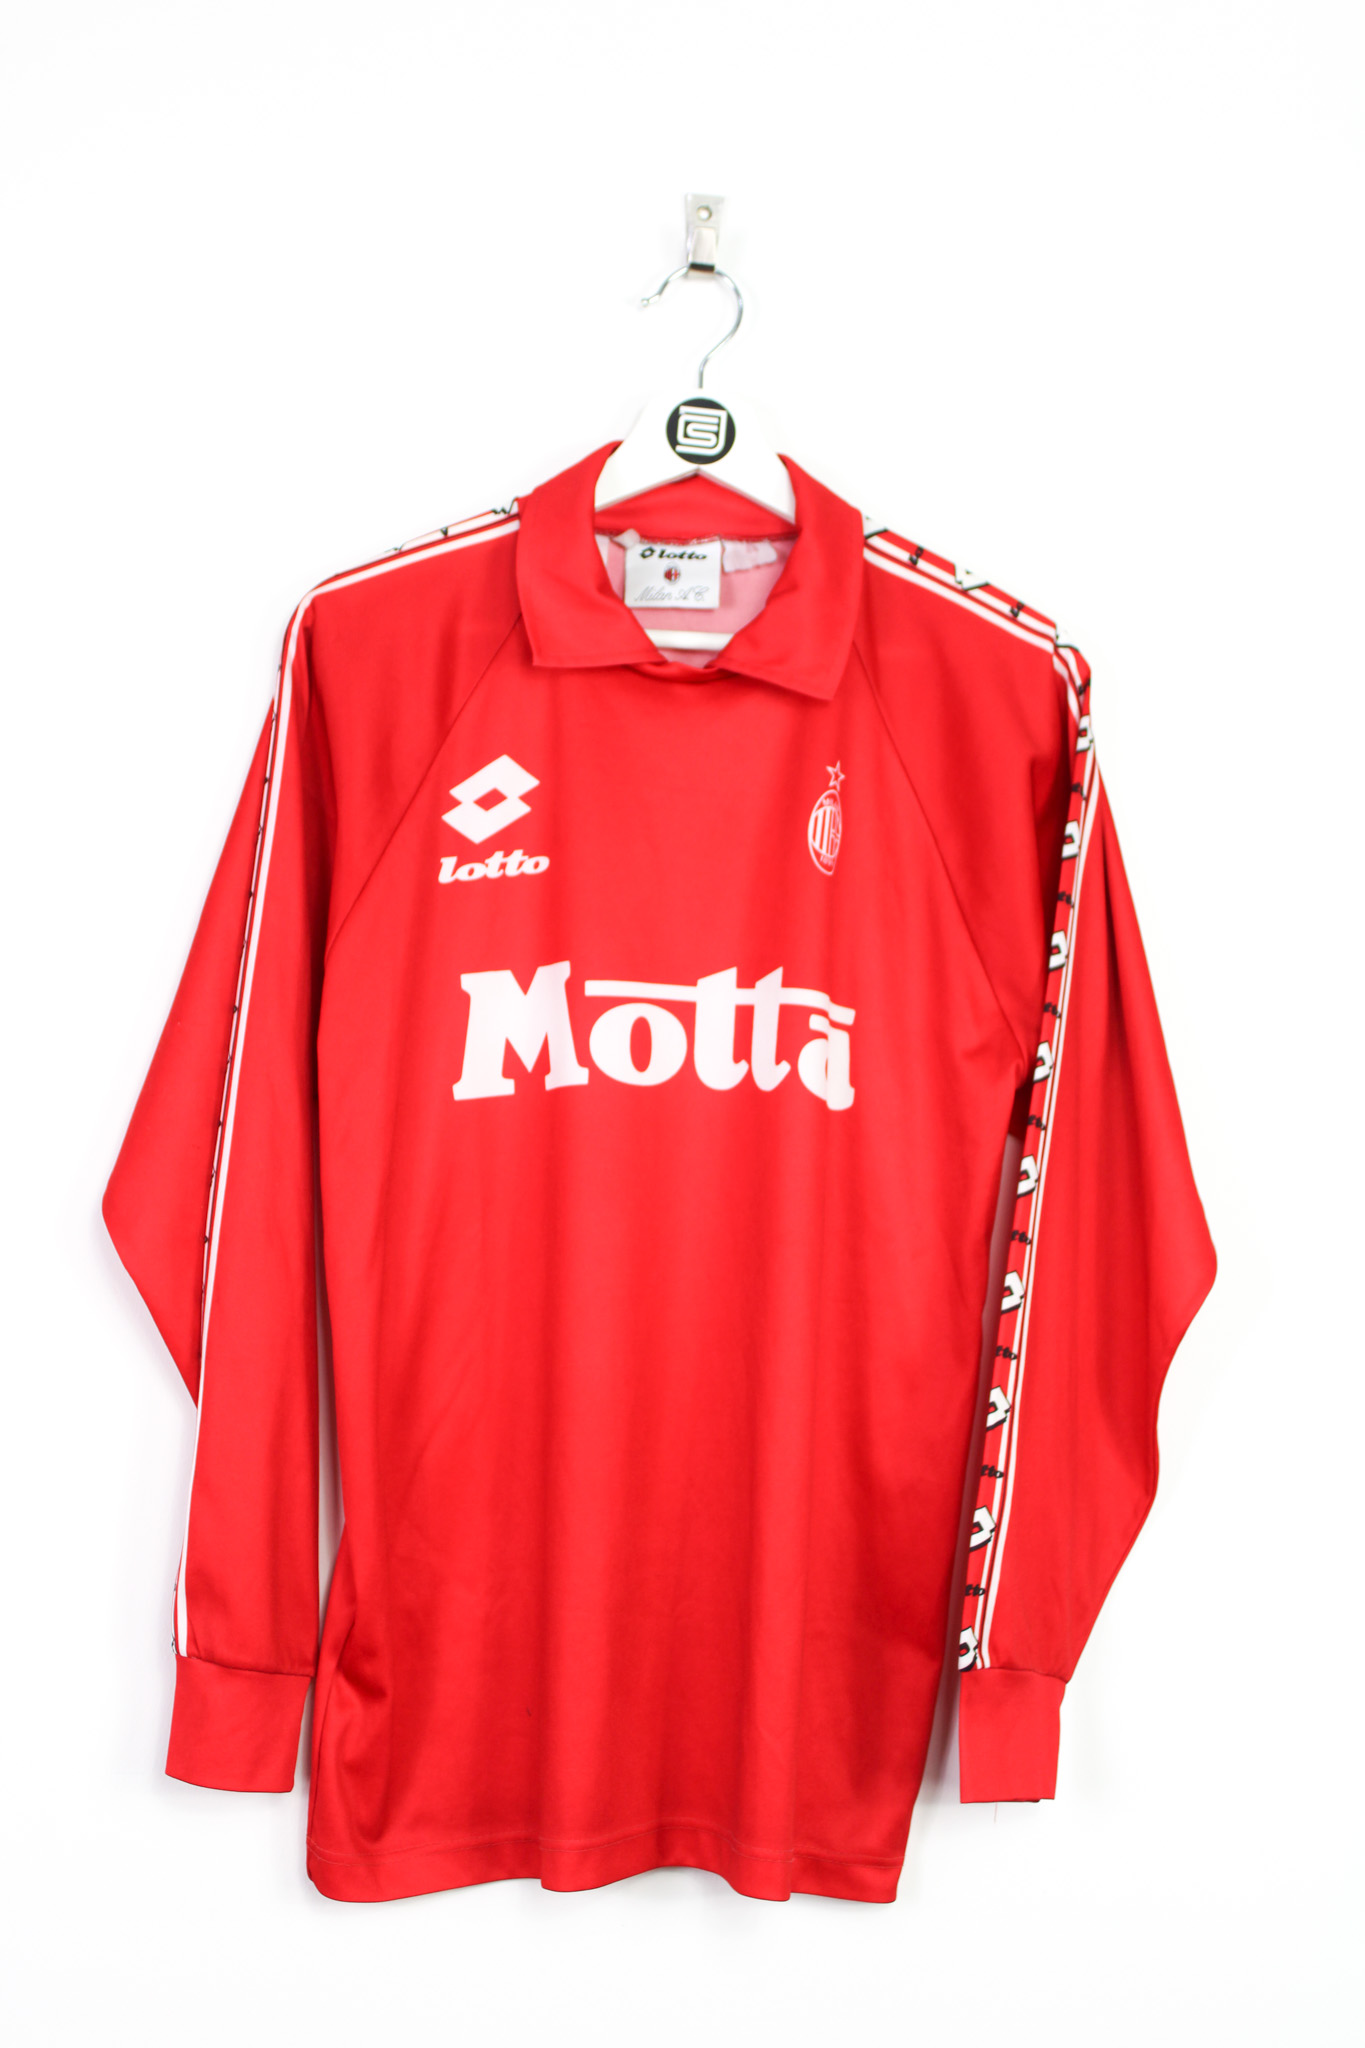 AC Milan 1997-98 track jacket - M/L